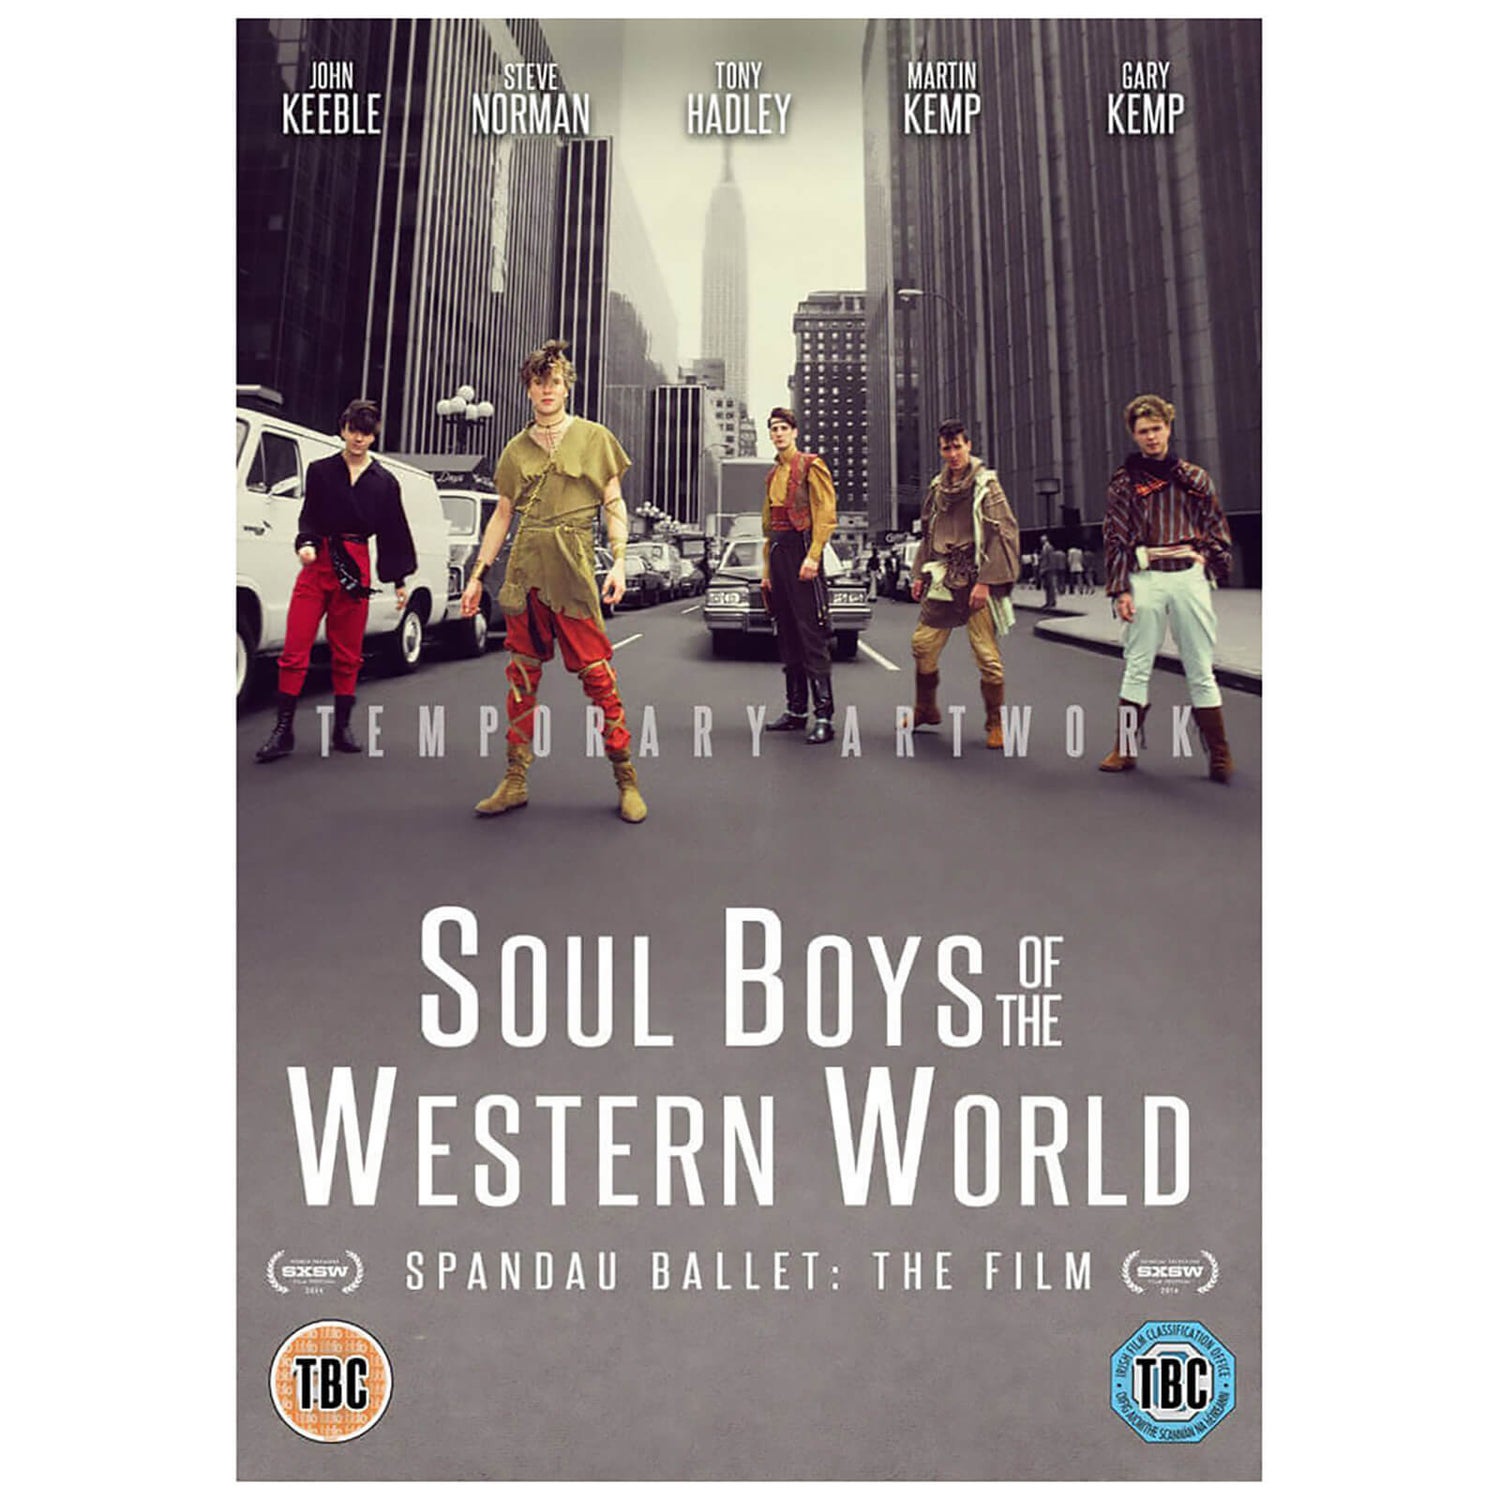 Soul Boys du monde occidental